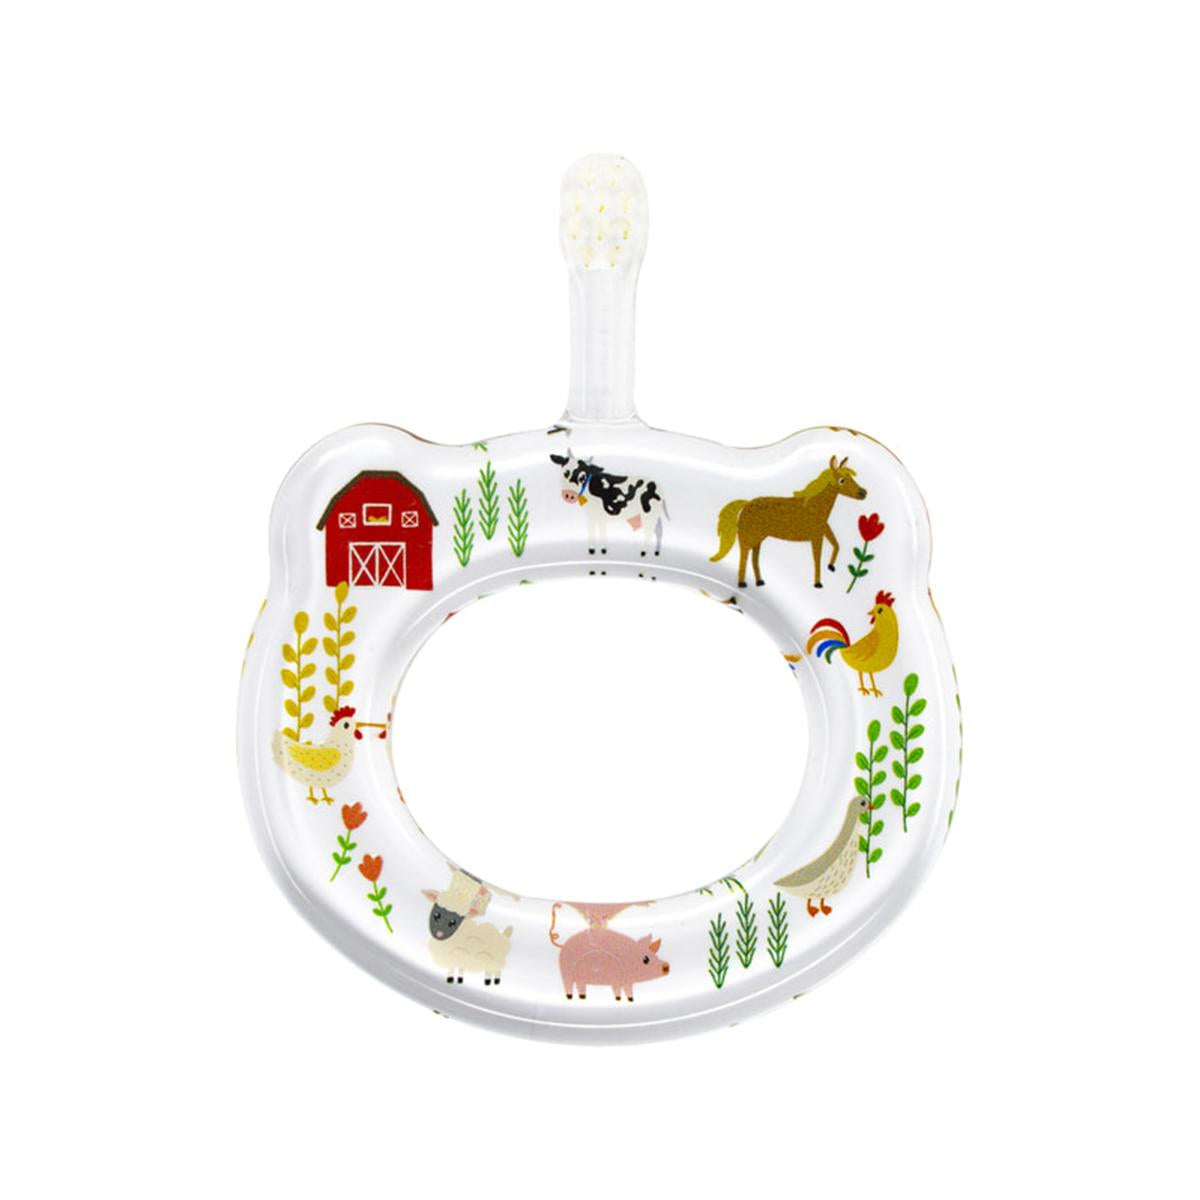 Primary image of Baby Hamico Farm Animals Toothbrush